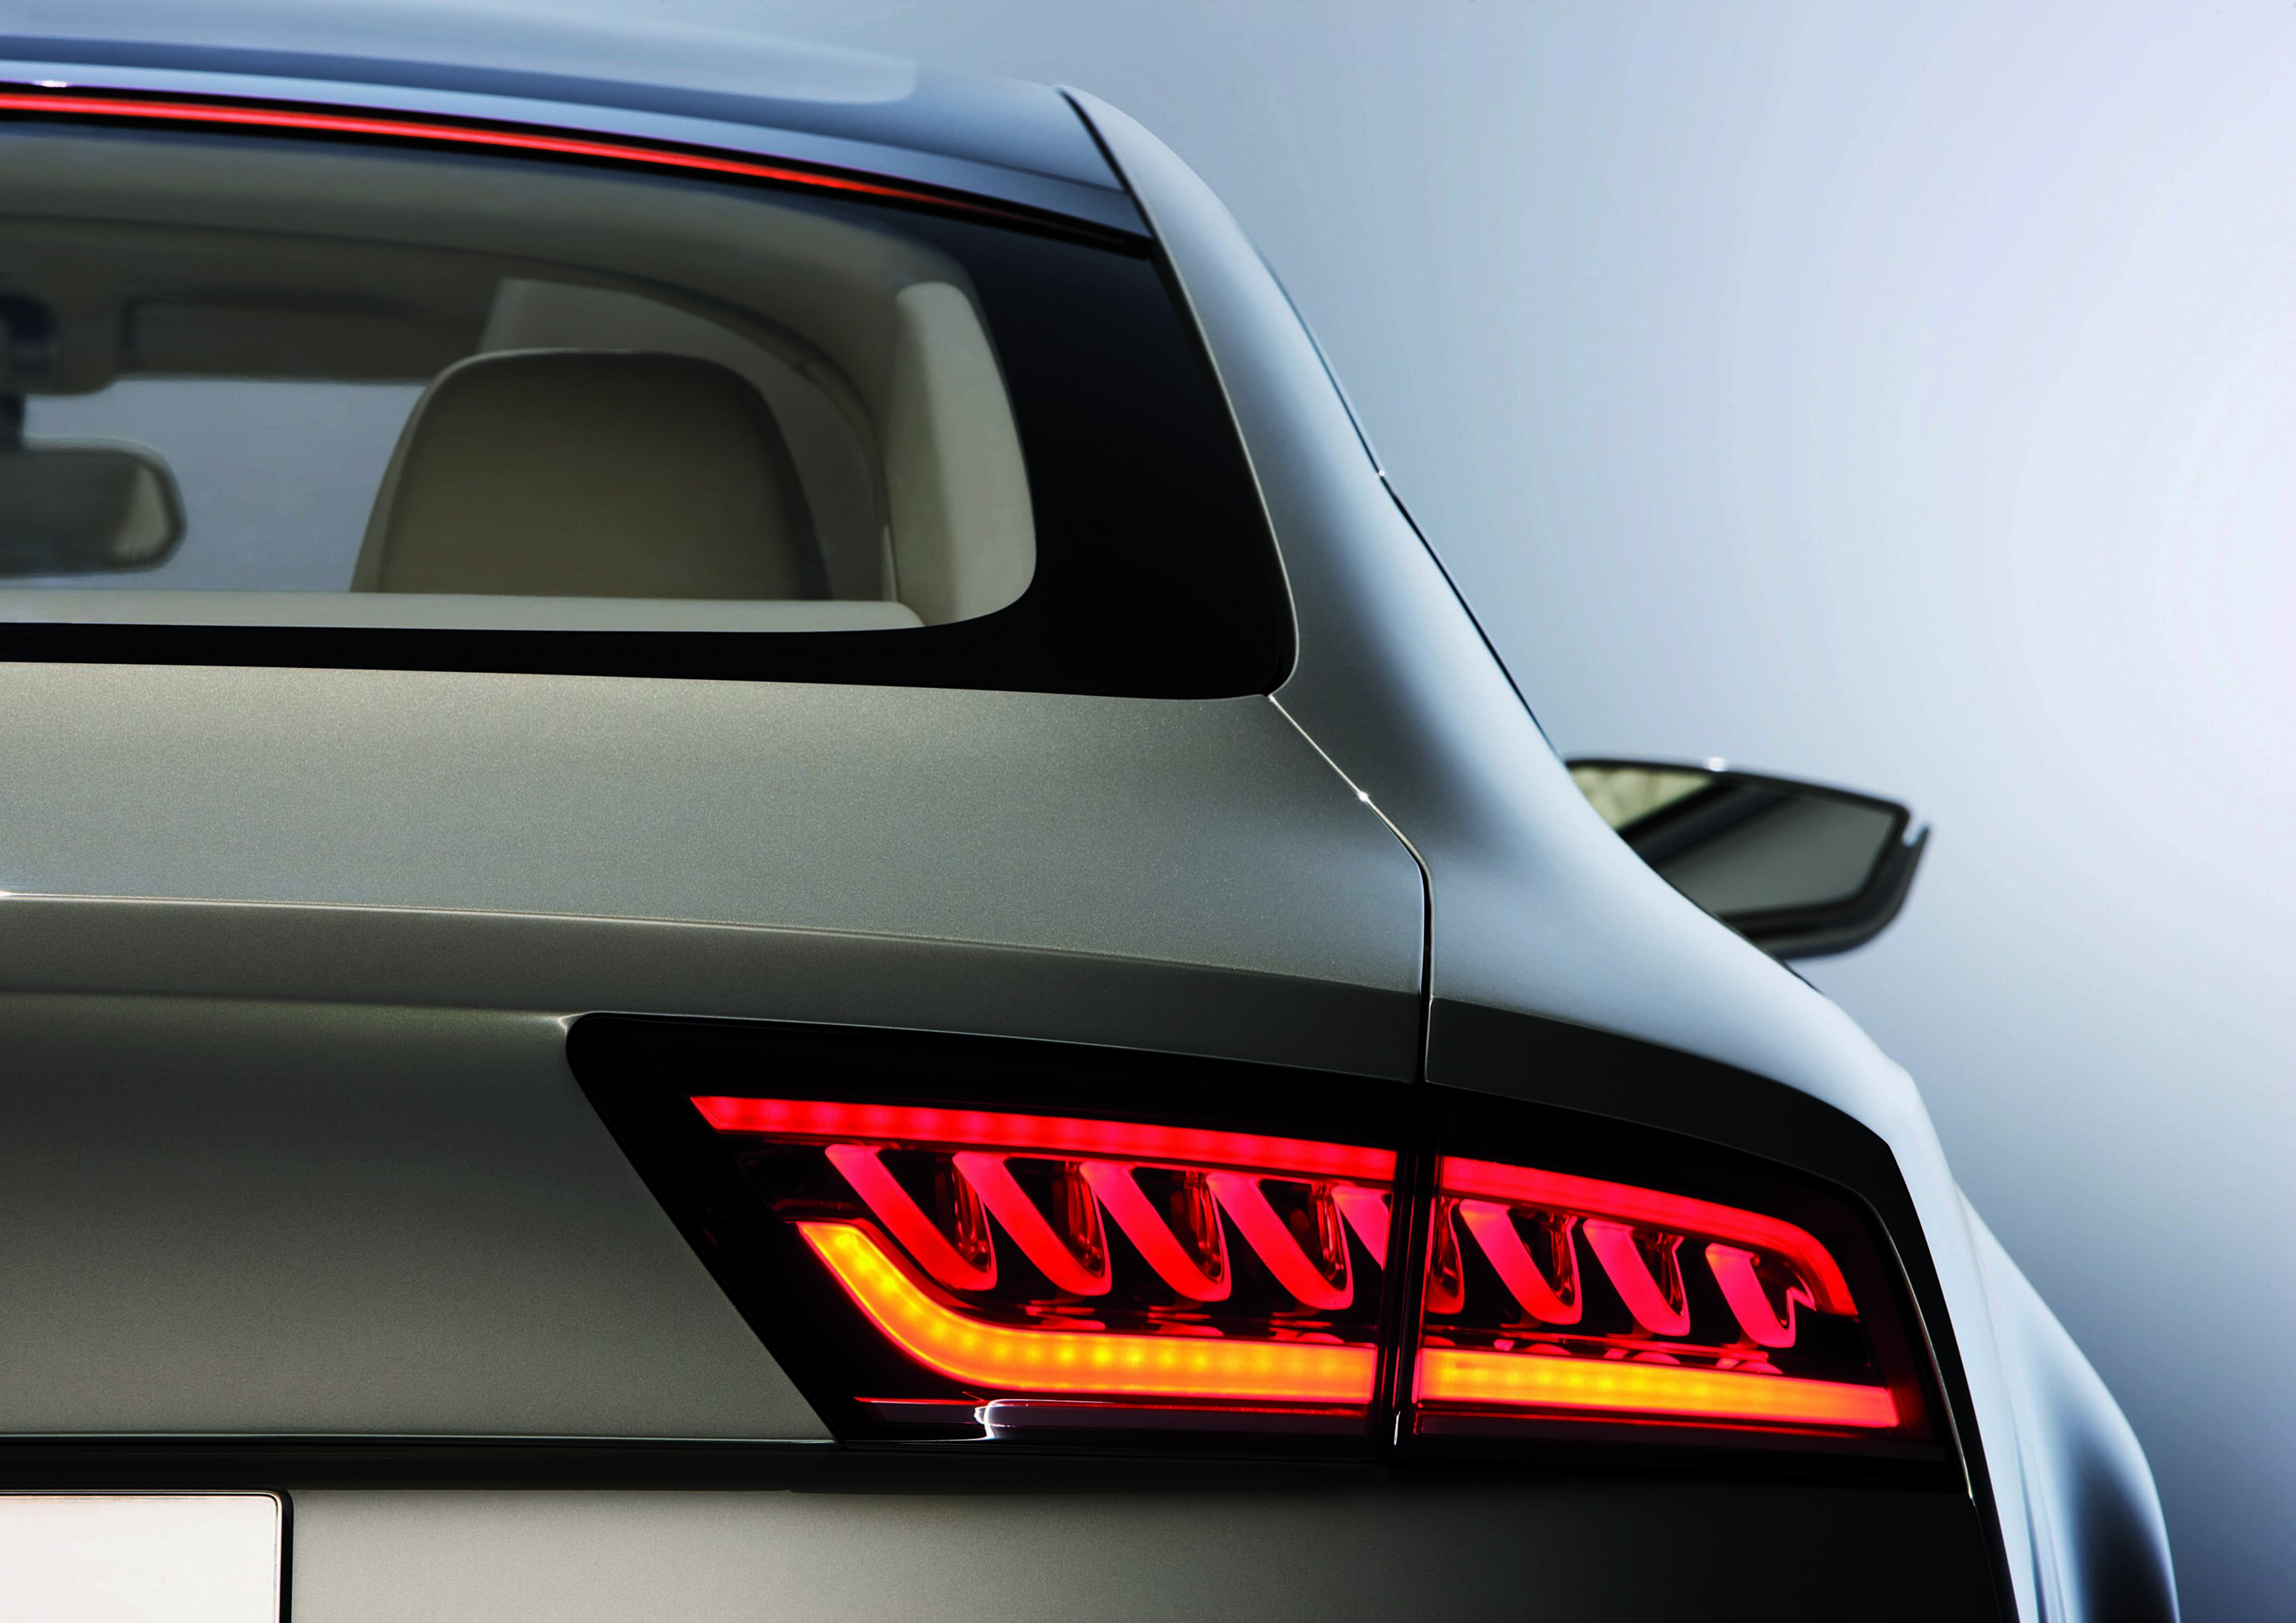 Audi Sportback concept